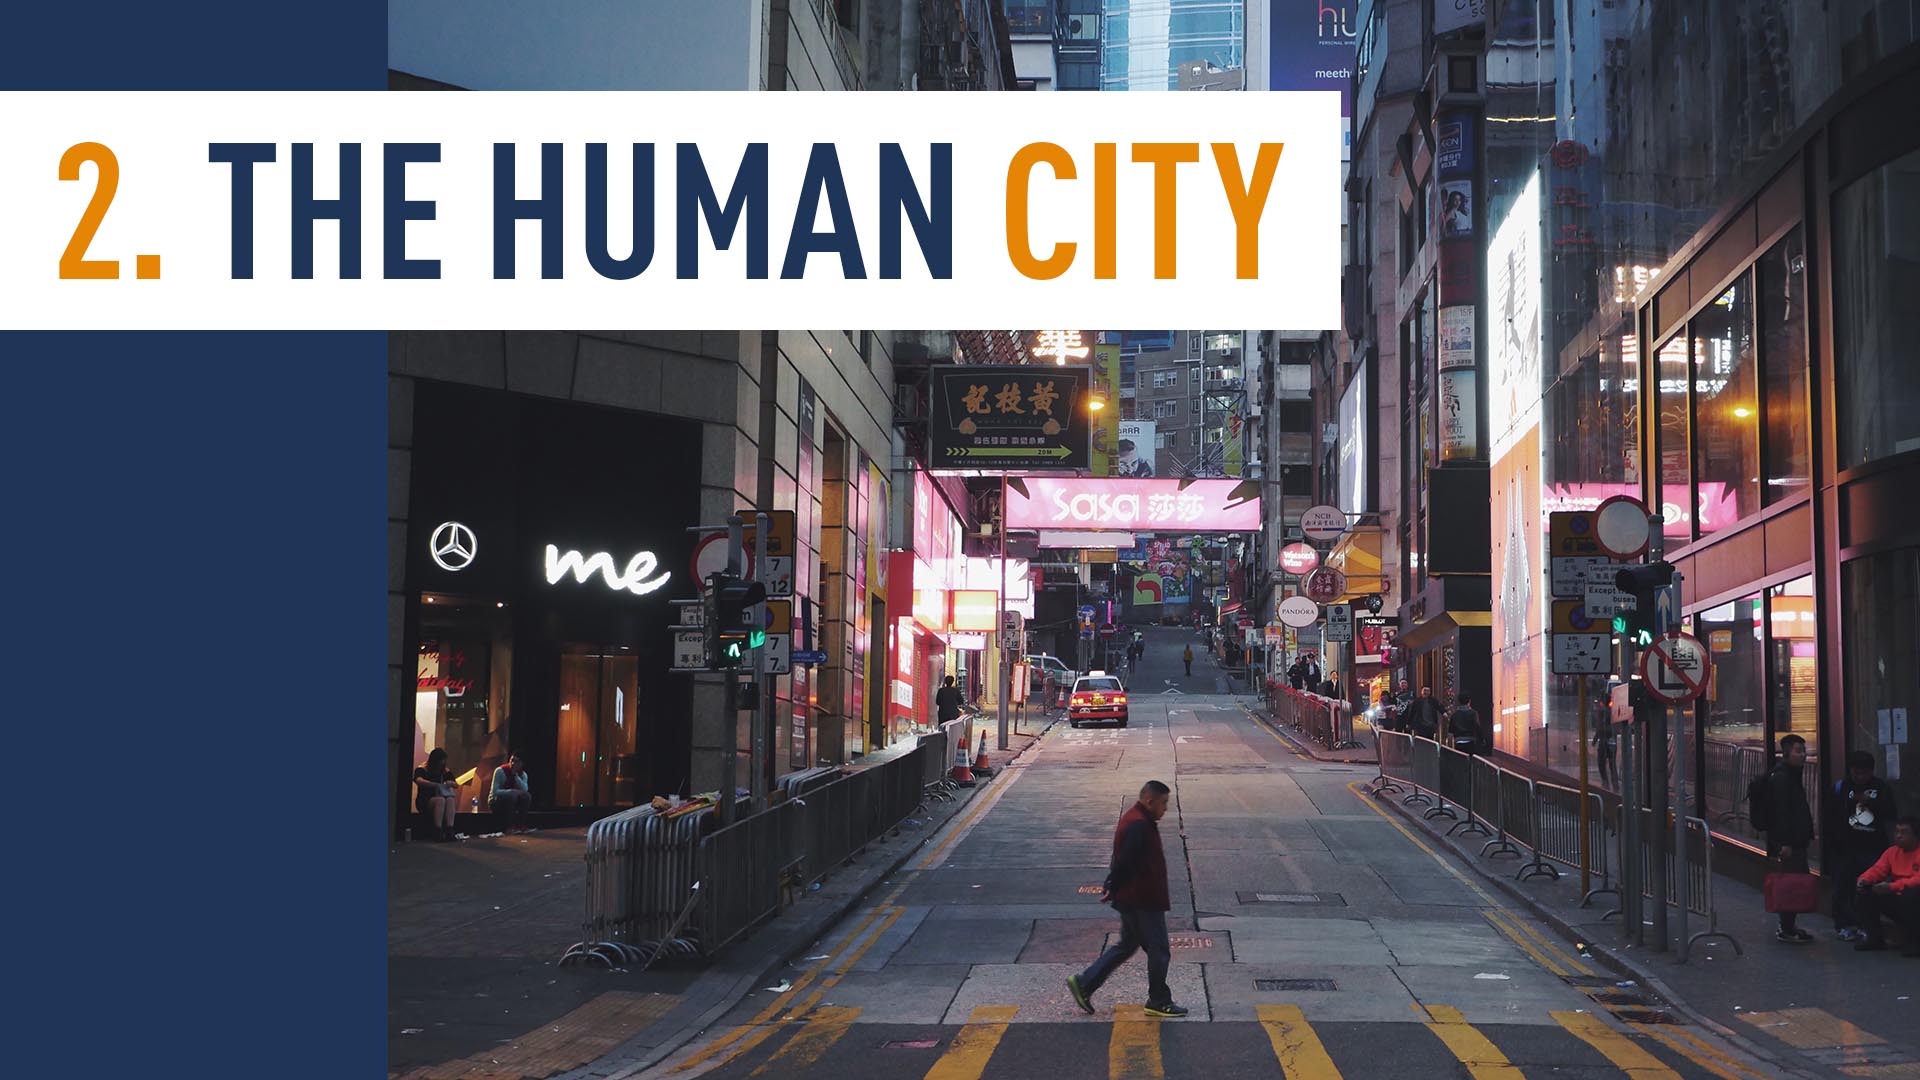 THE HUMAN CITY